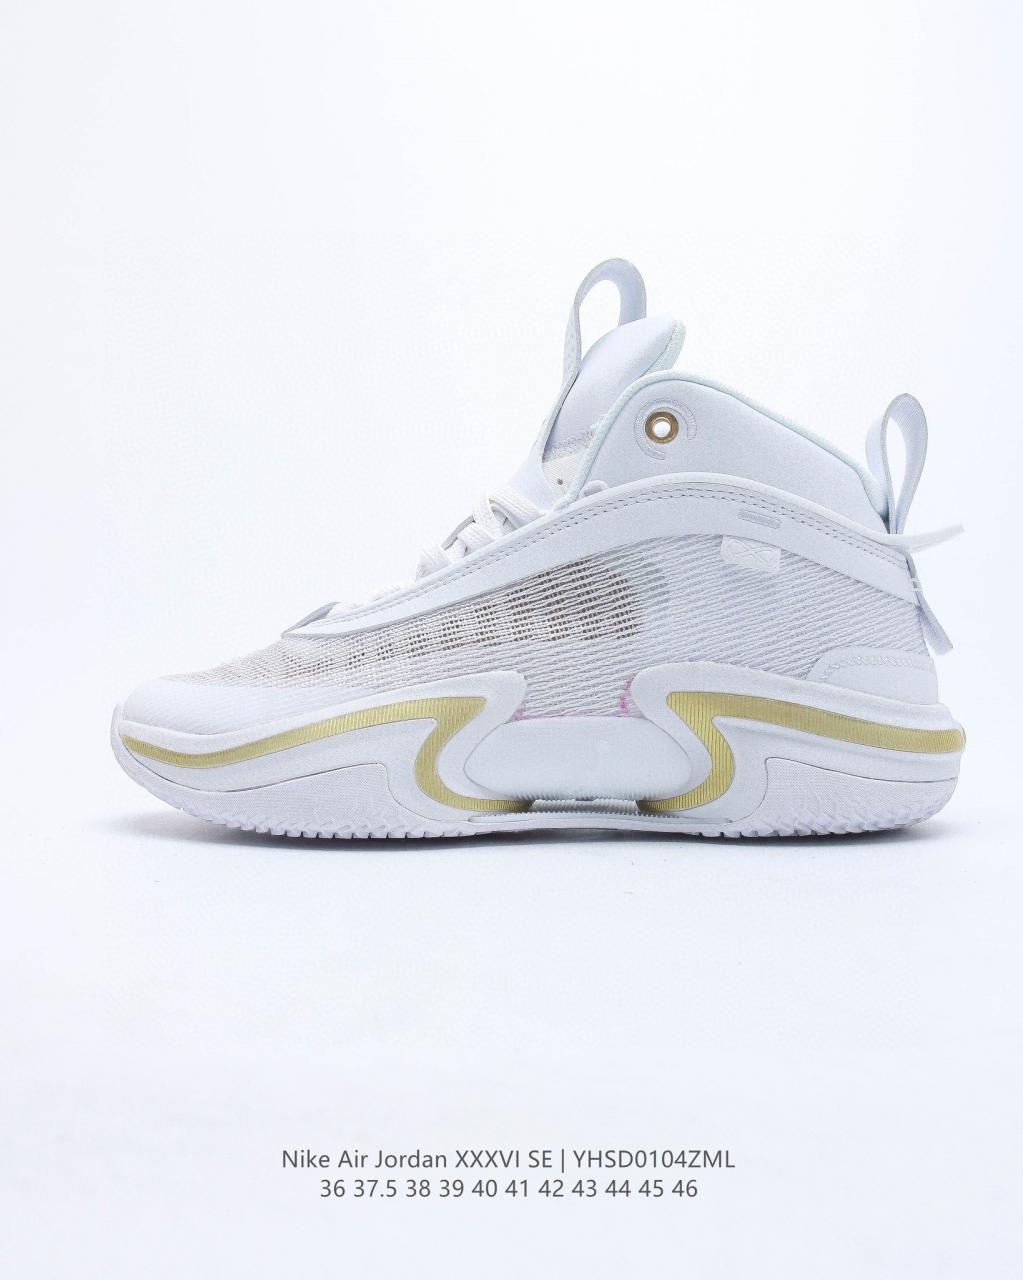 Air Jordan 36 “White Gold”Jordan Brand Basketball shoes插图2